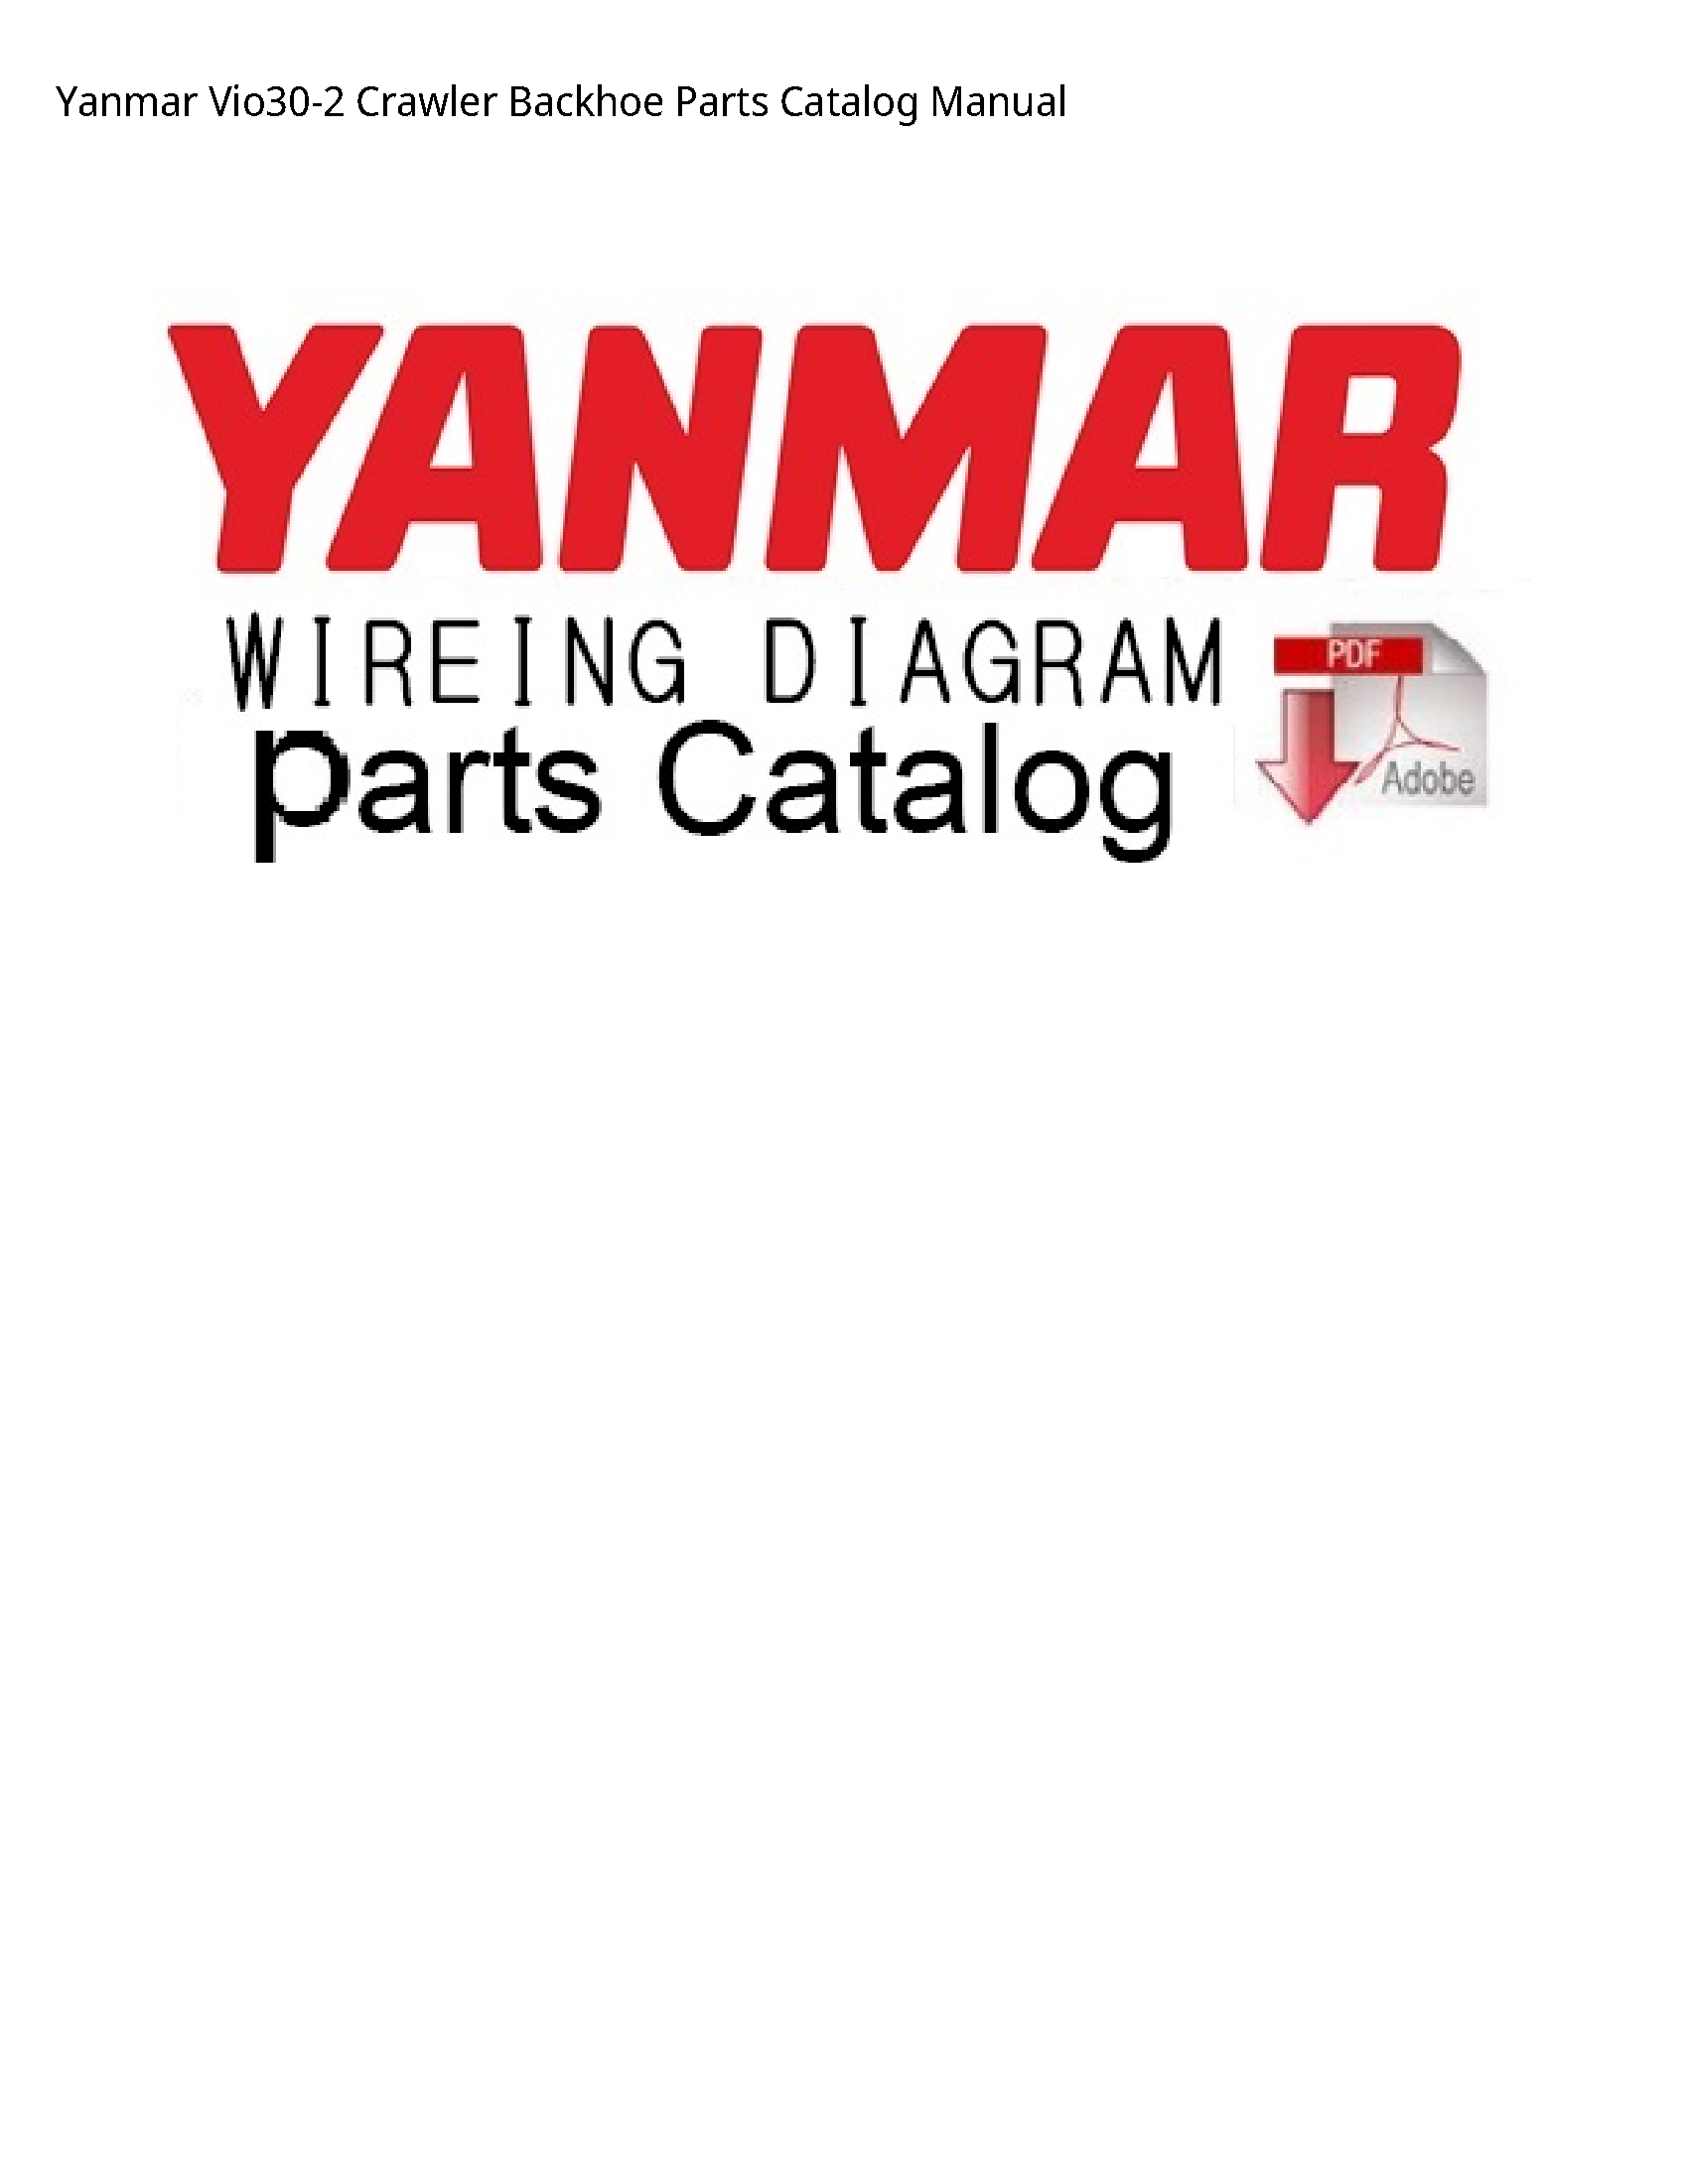 Yanmar Vio30-2 Crawler Backhoe Parts Catalog manual